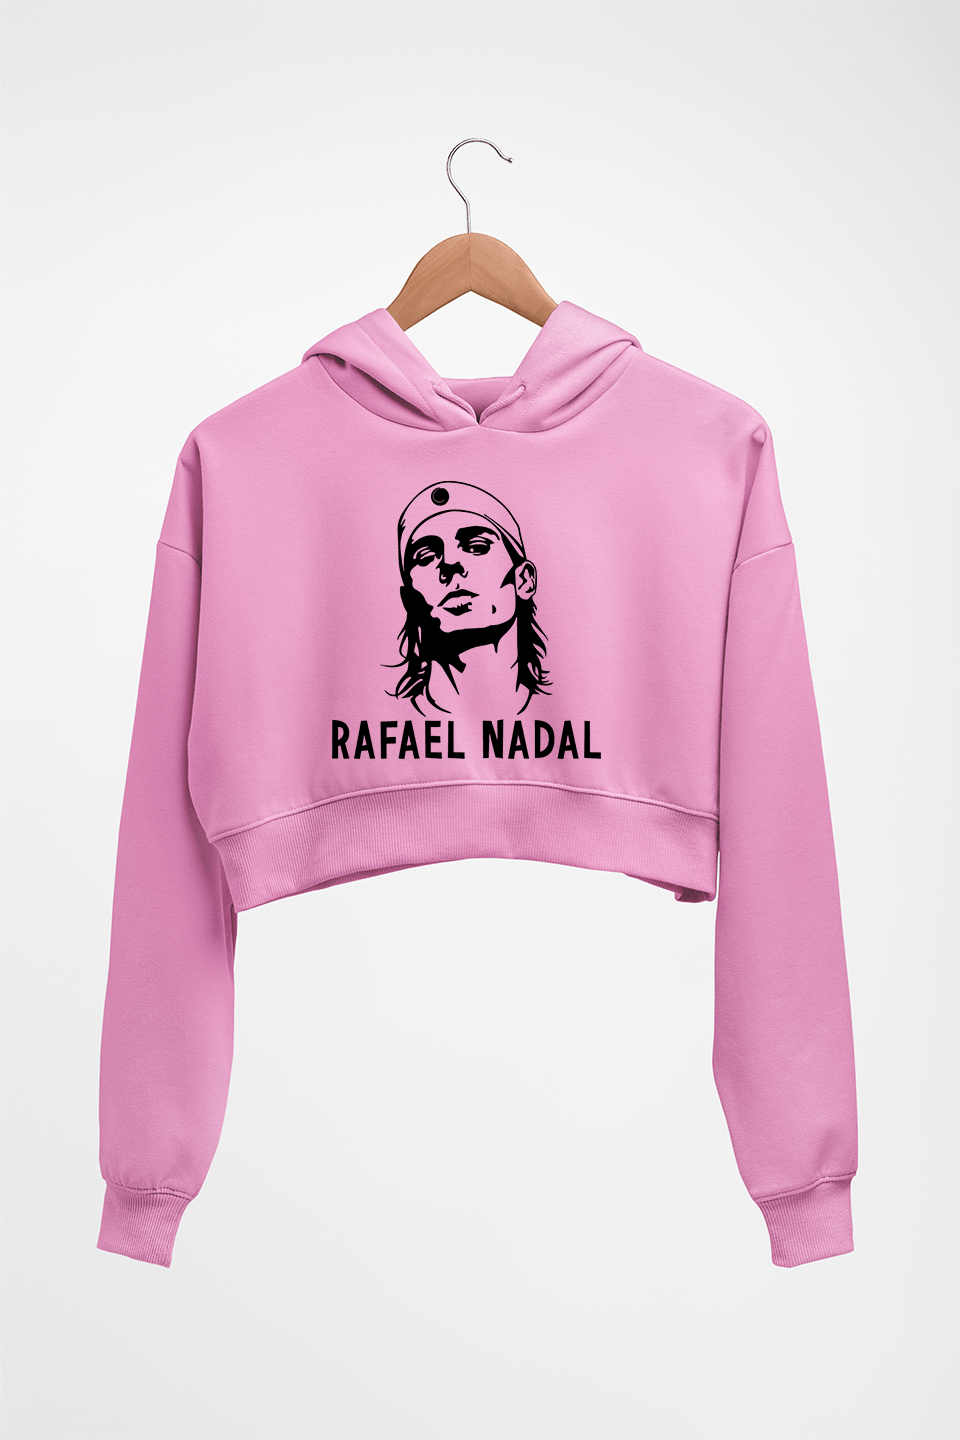 Rafael Nadal (RAFA) Crop HOODIE FOR WOMEN